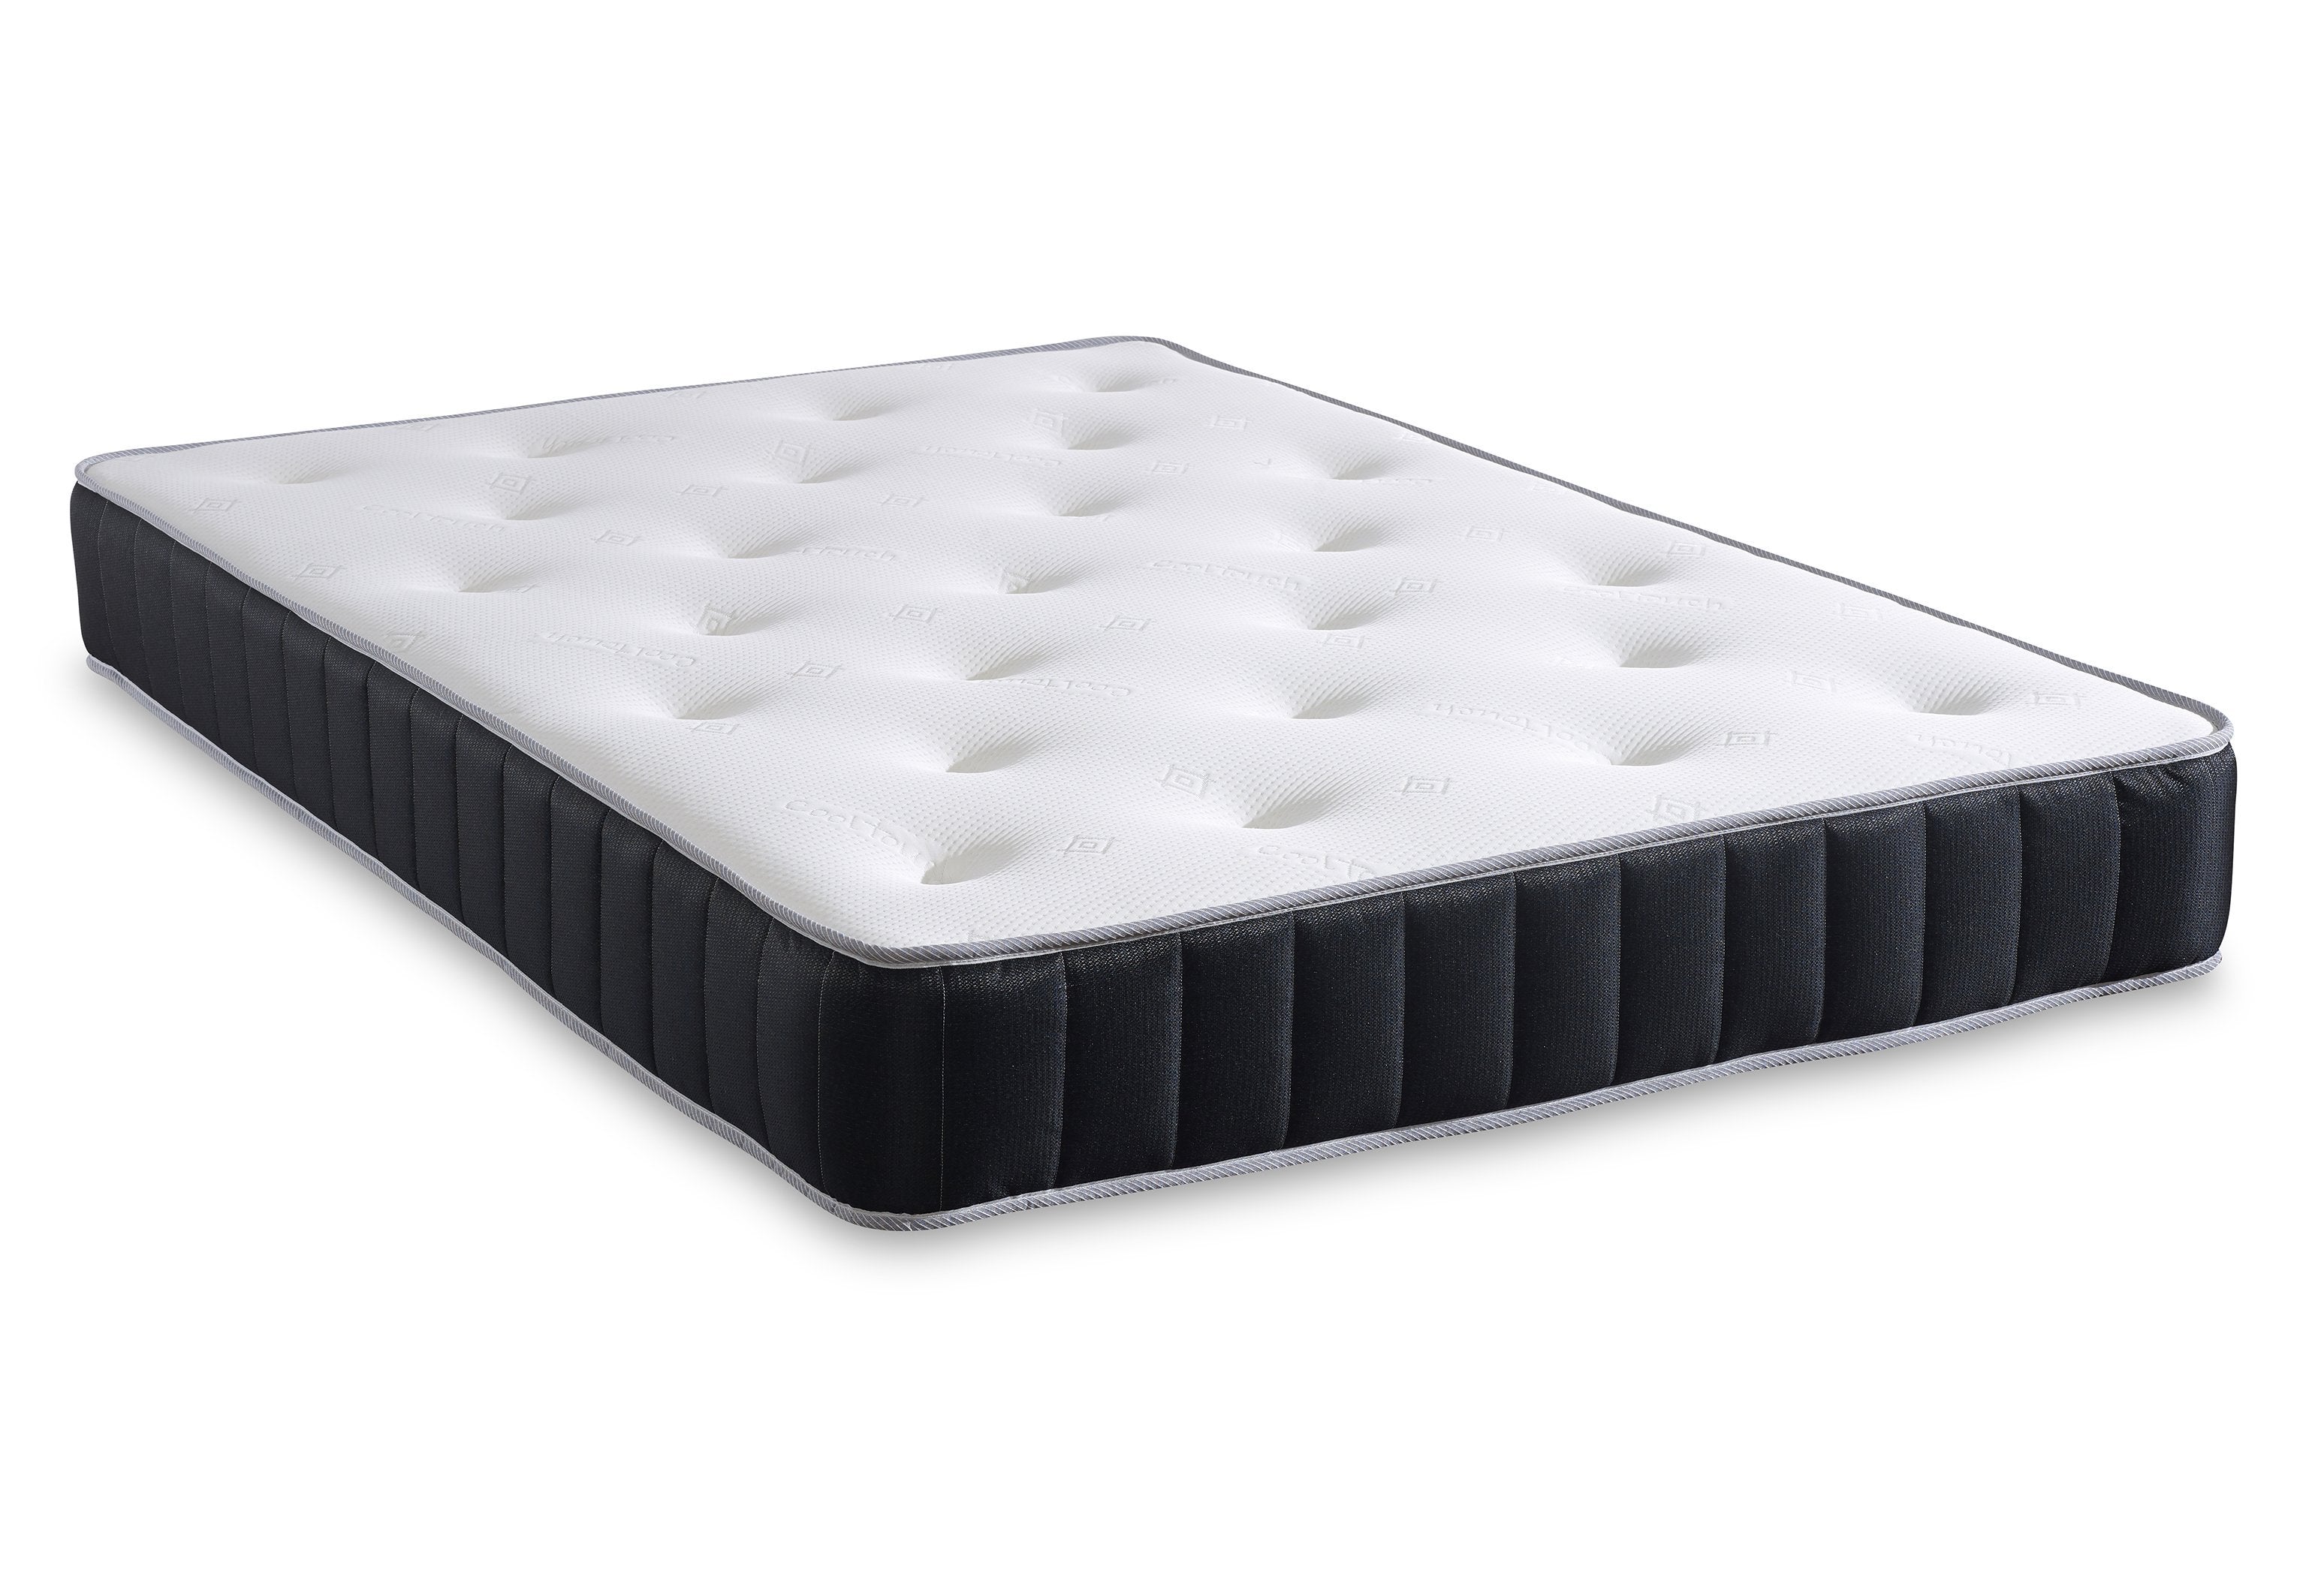 luxury memory foam mattress reviews